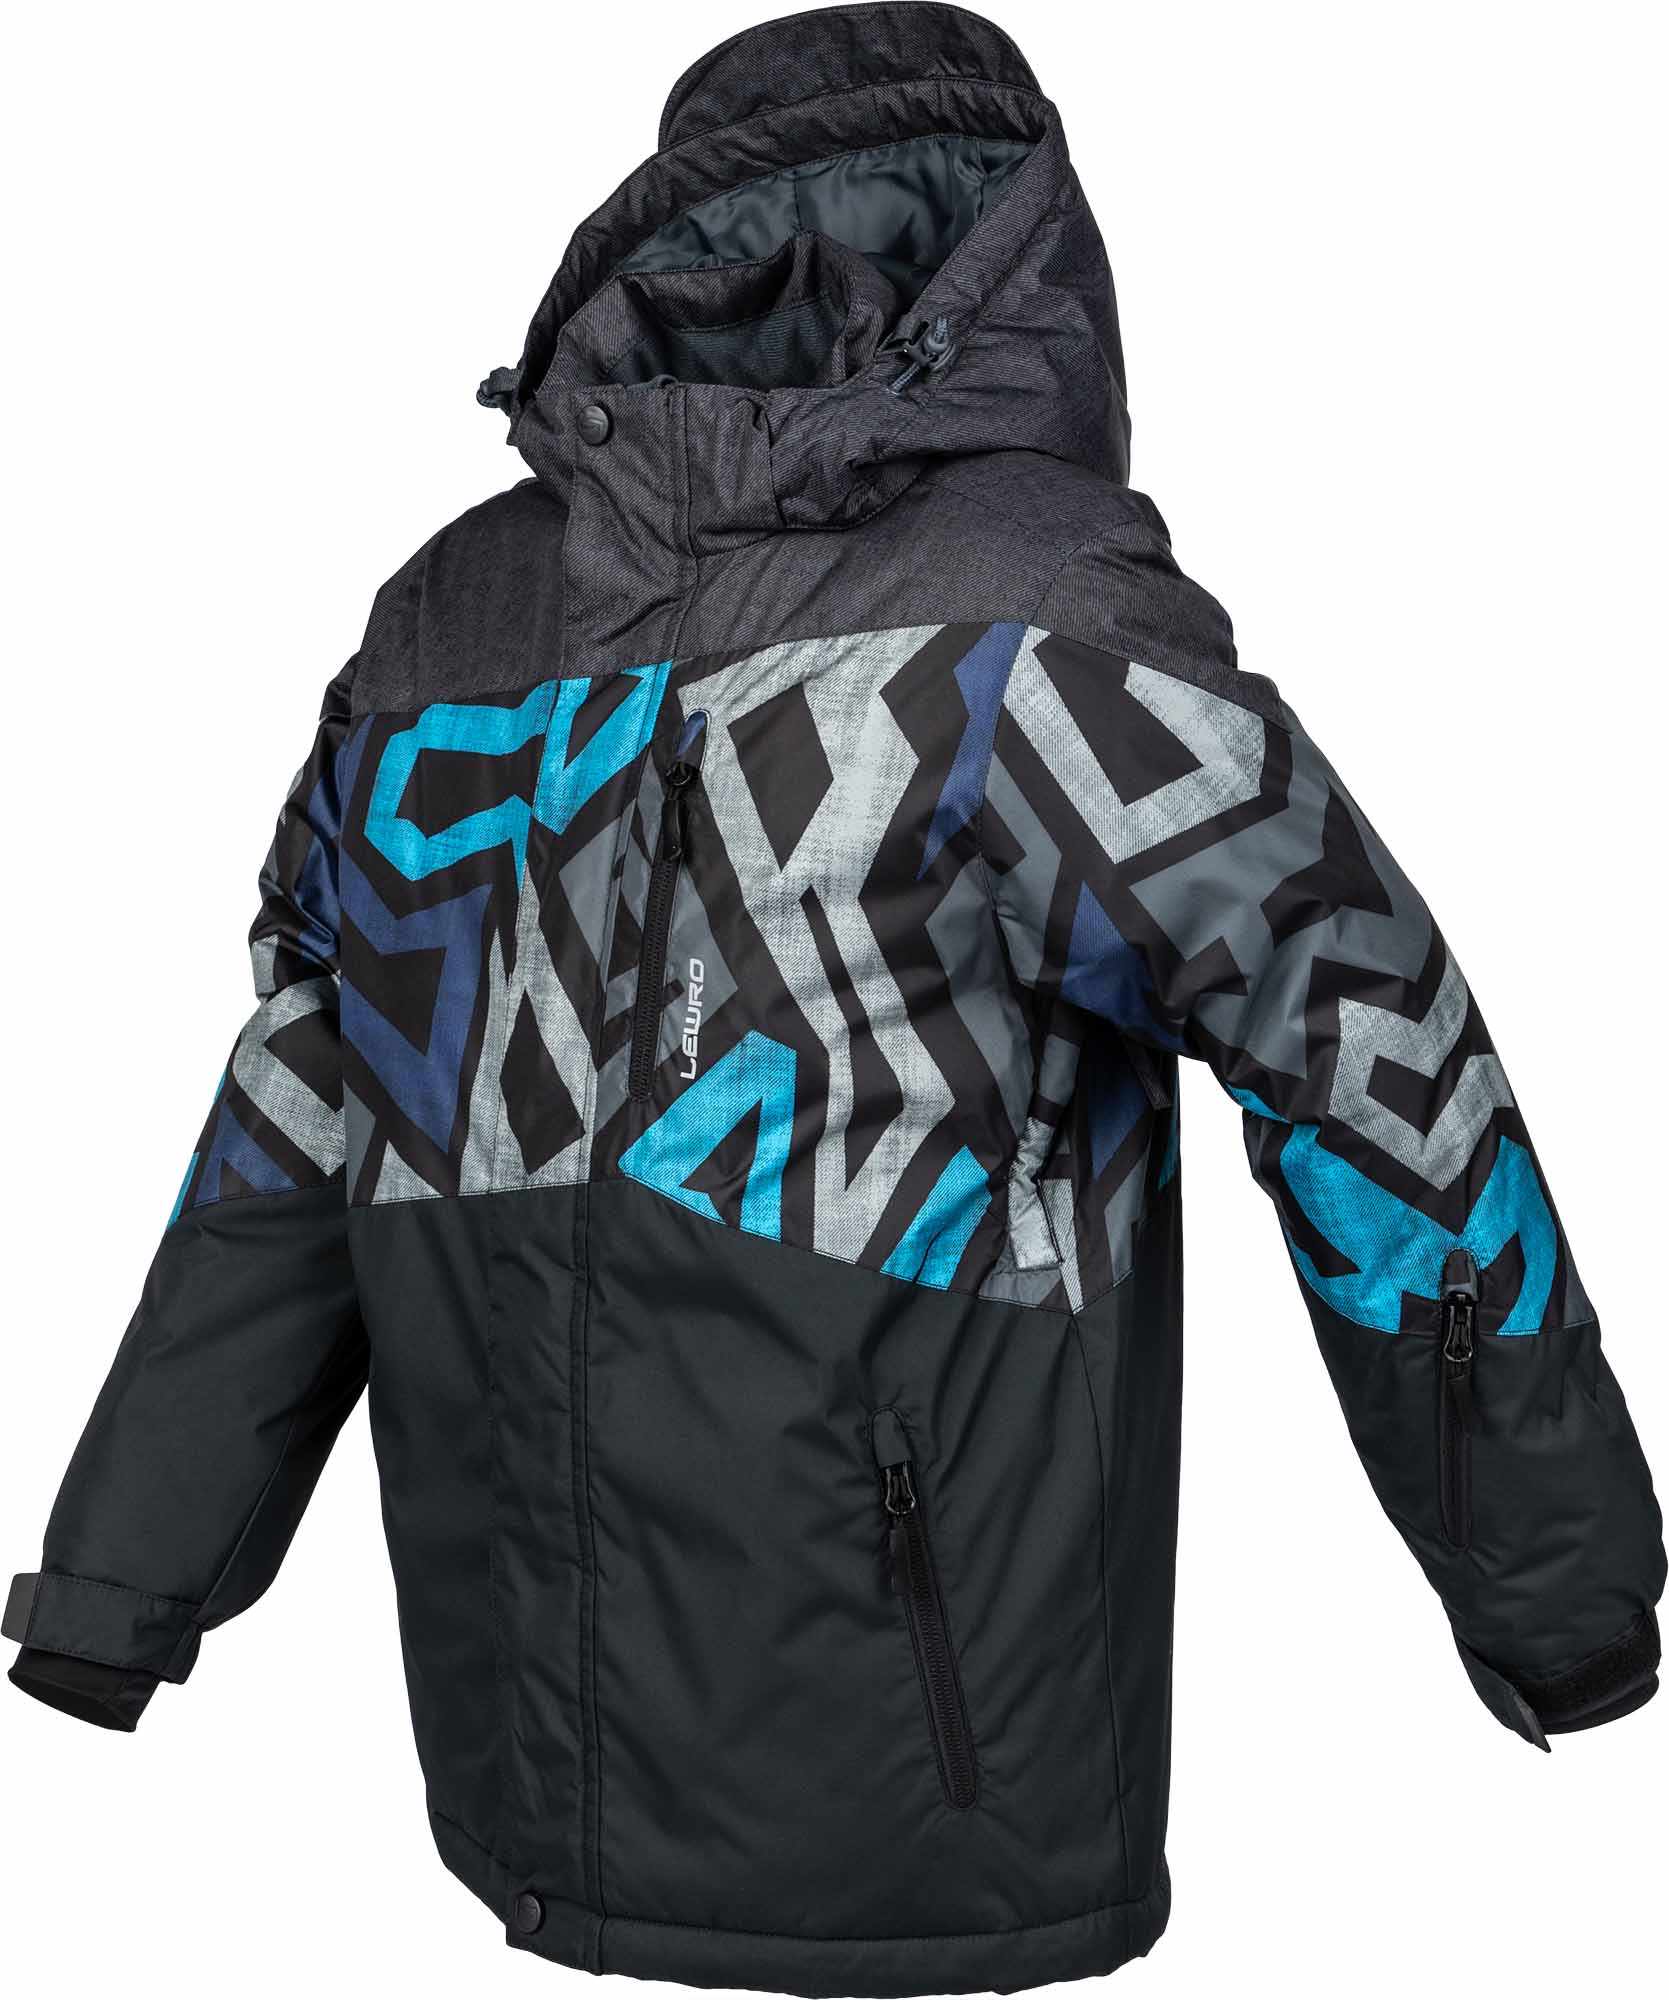 Chlapecká snowboardová bunda